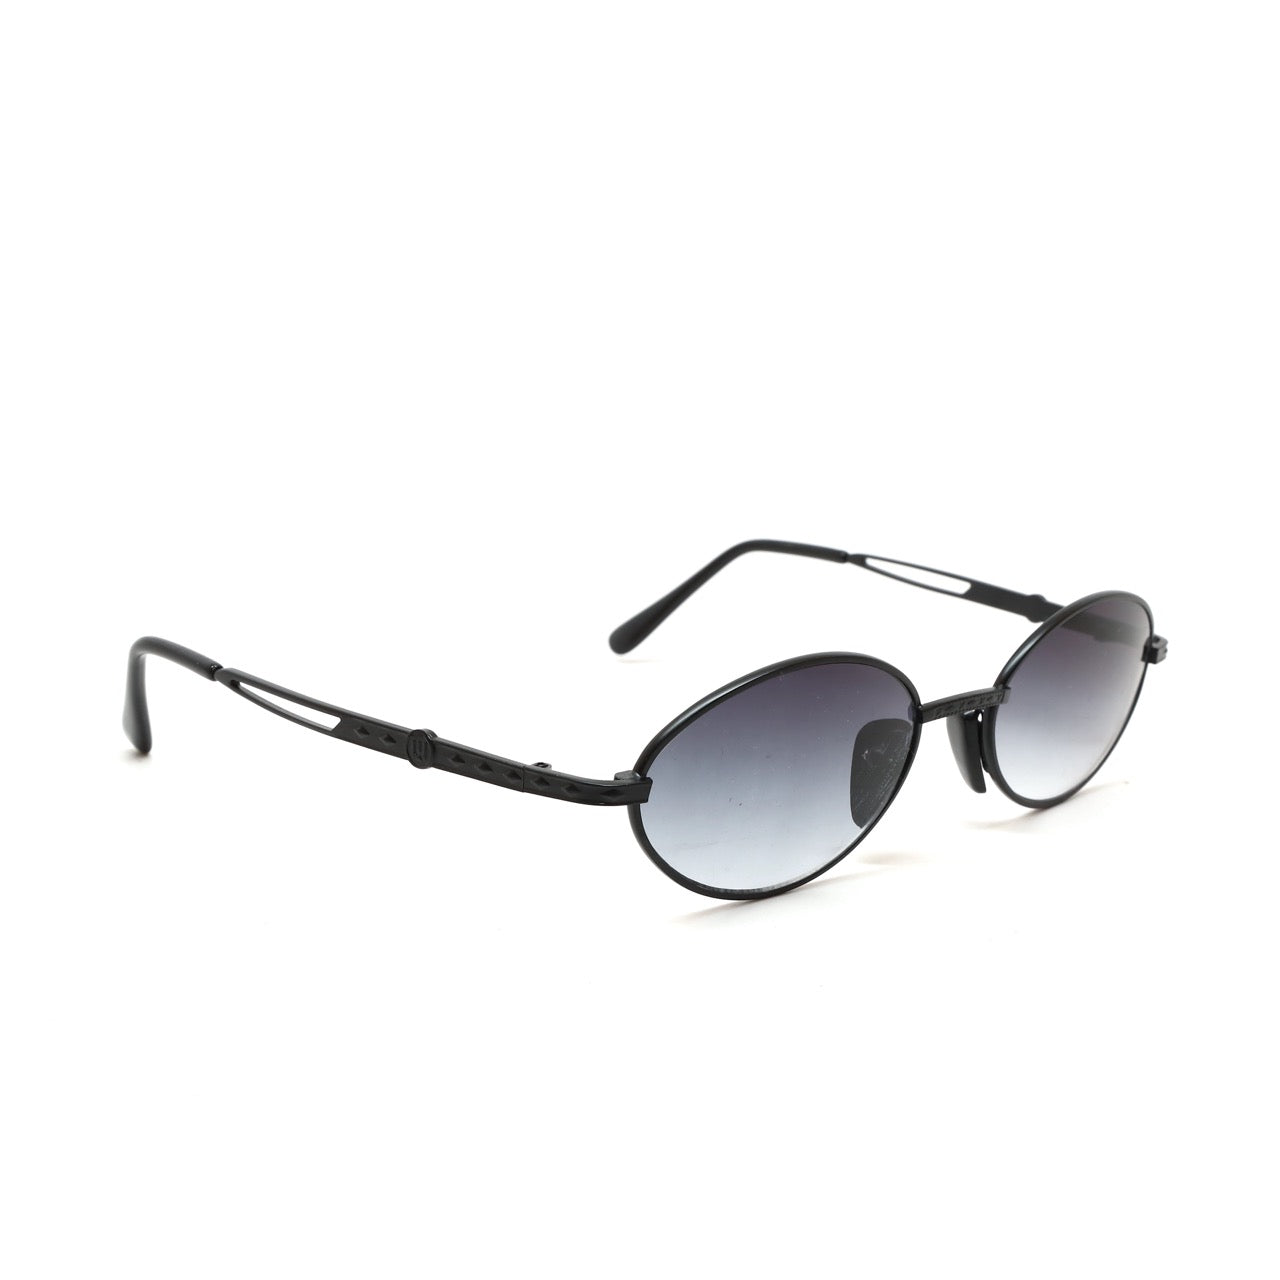 Vintage MINI Small Size 1992 Neo Santa Fe Oval Frame Sunglasses - Black